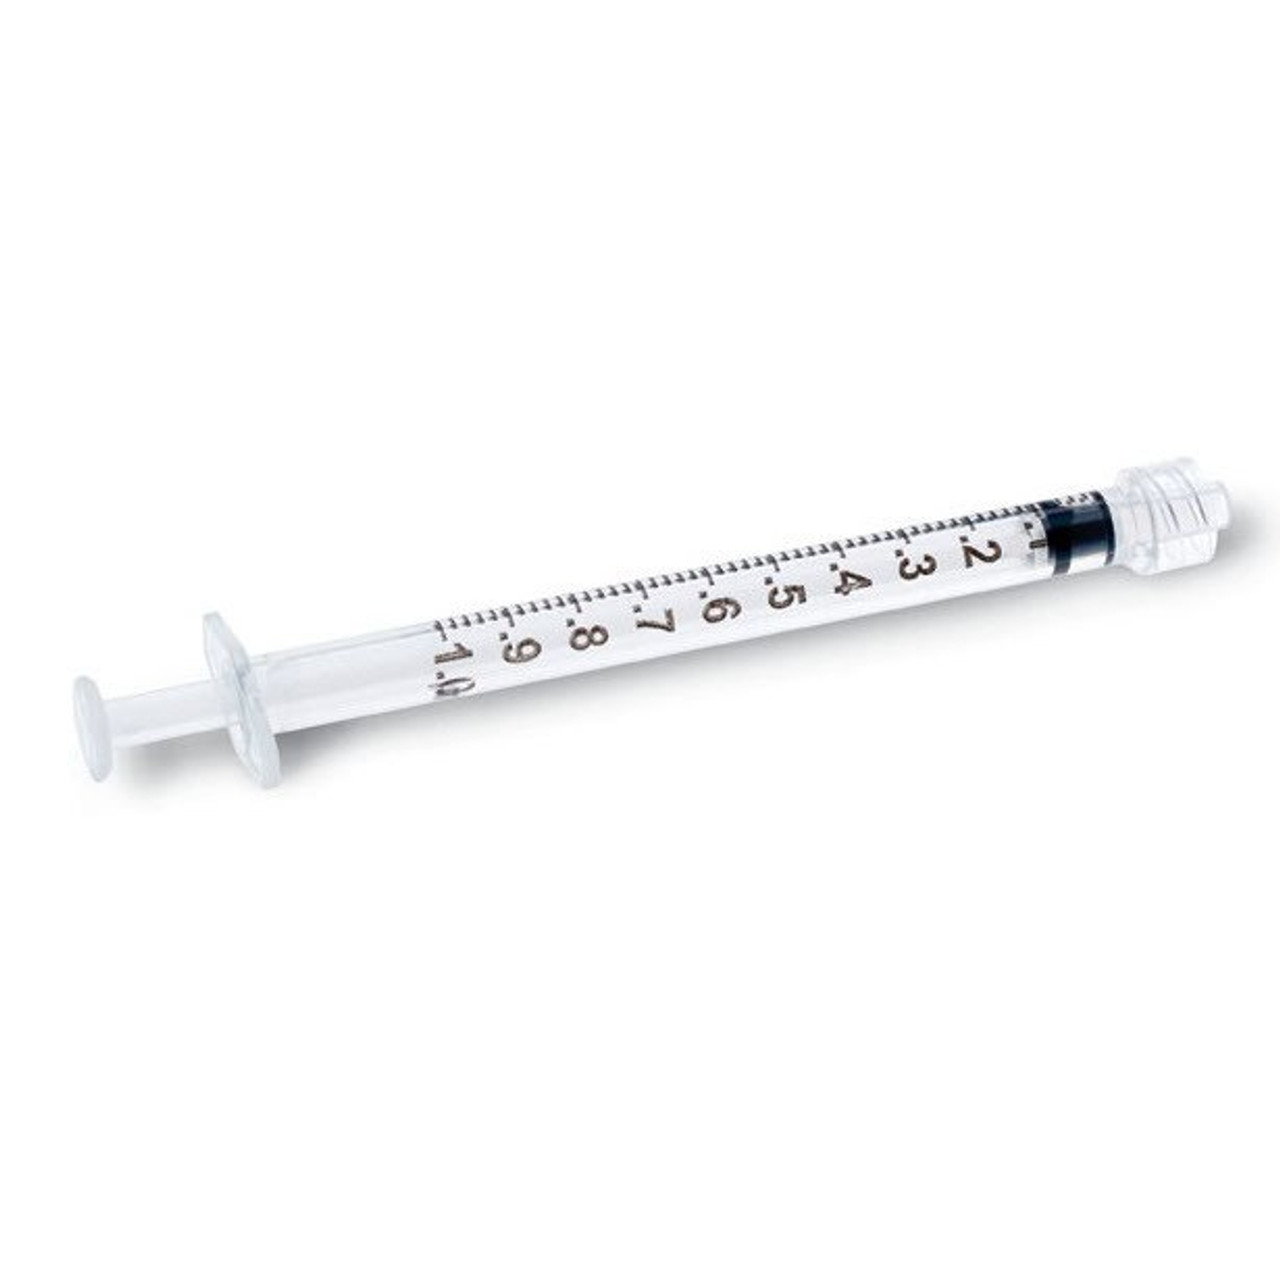 Standard 1cc Syringe